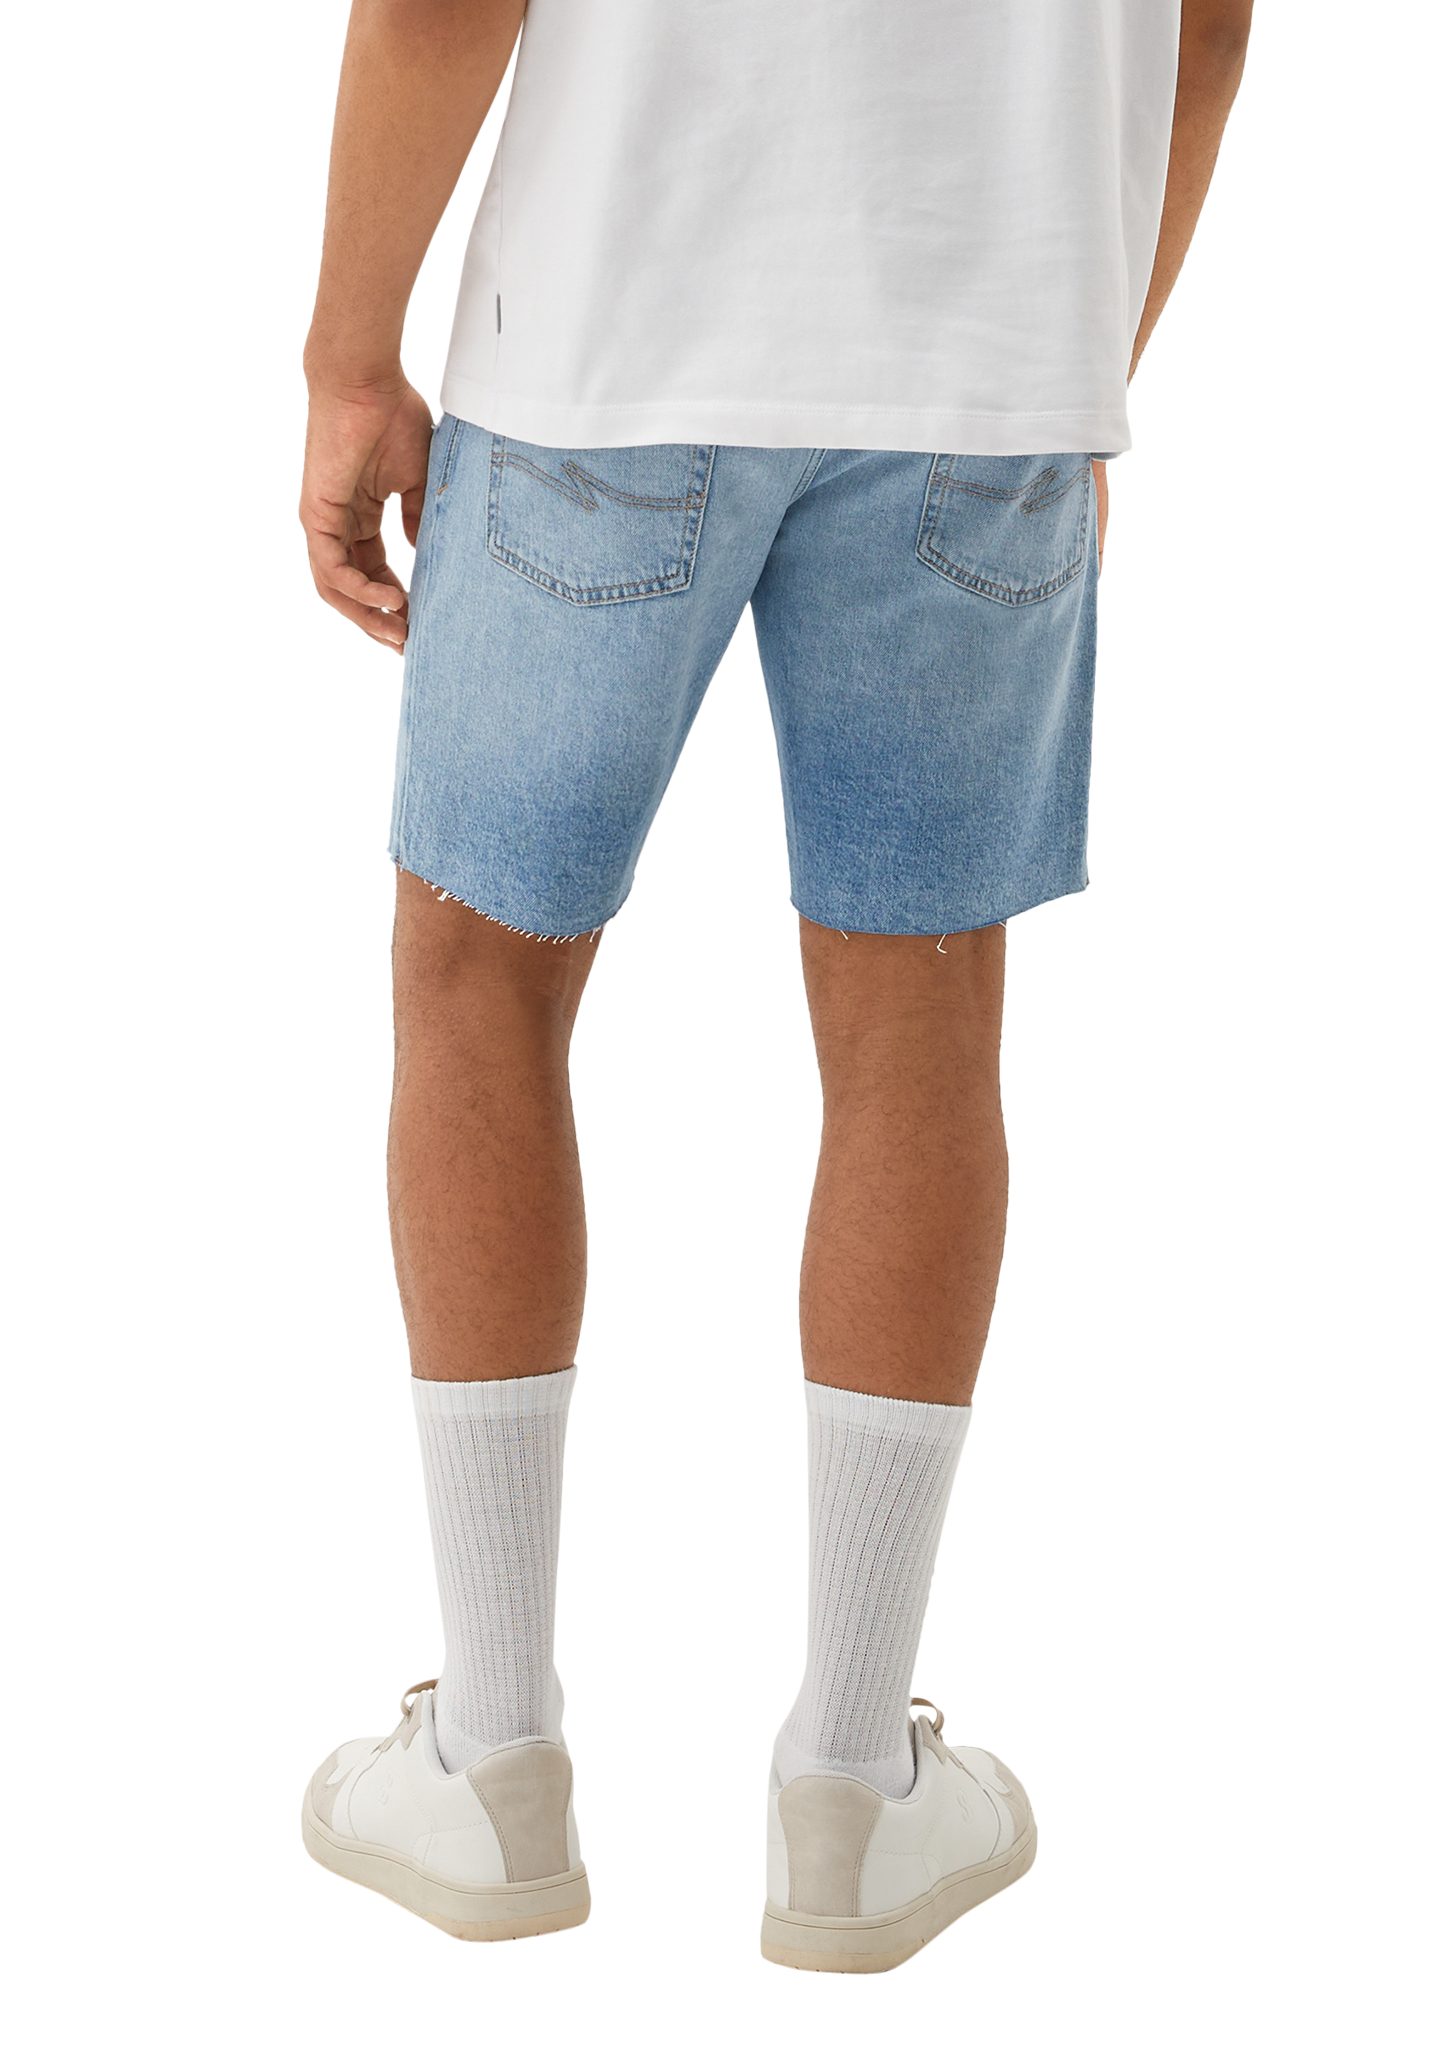 Mid QS / Ziernaht / John / Jeans-Shorts Regular Waschung, Rise Fit himmelblau Straight Leg Jeansshorts Label-Patch,